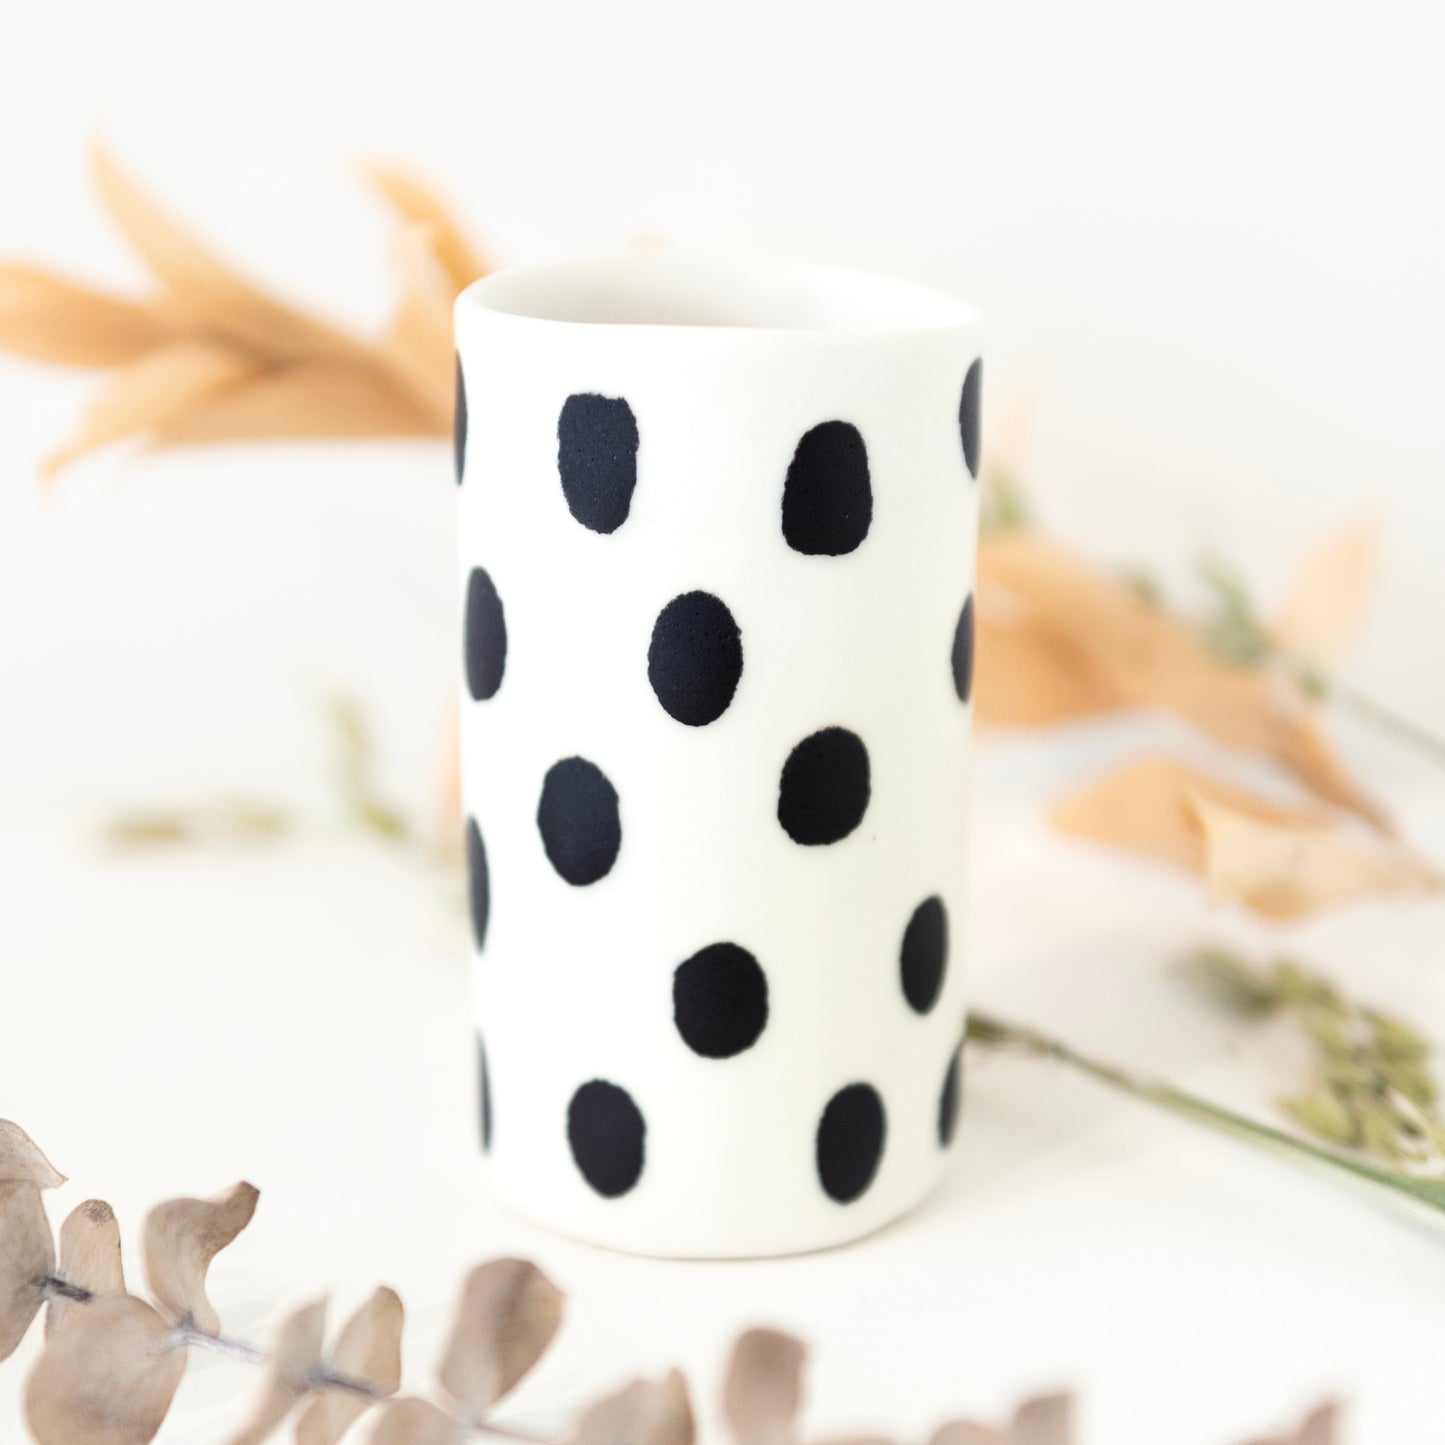 White bud vase with black dot patterning.